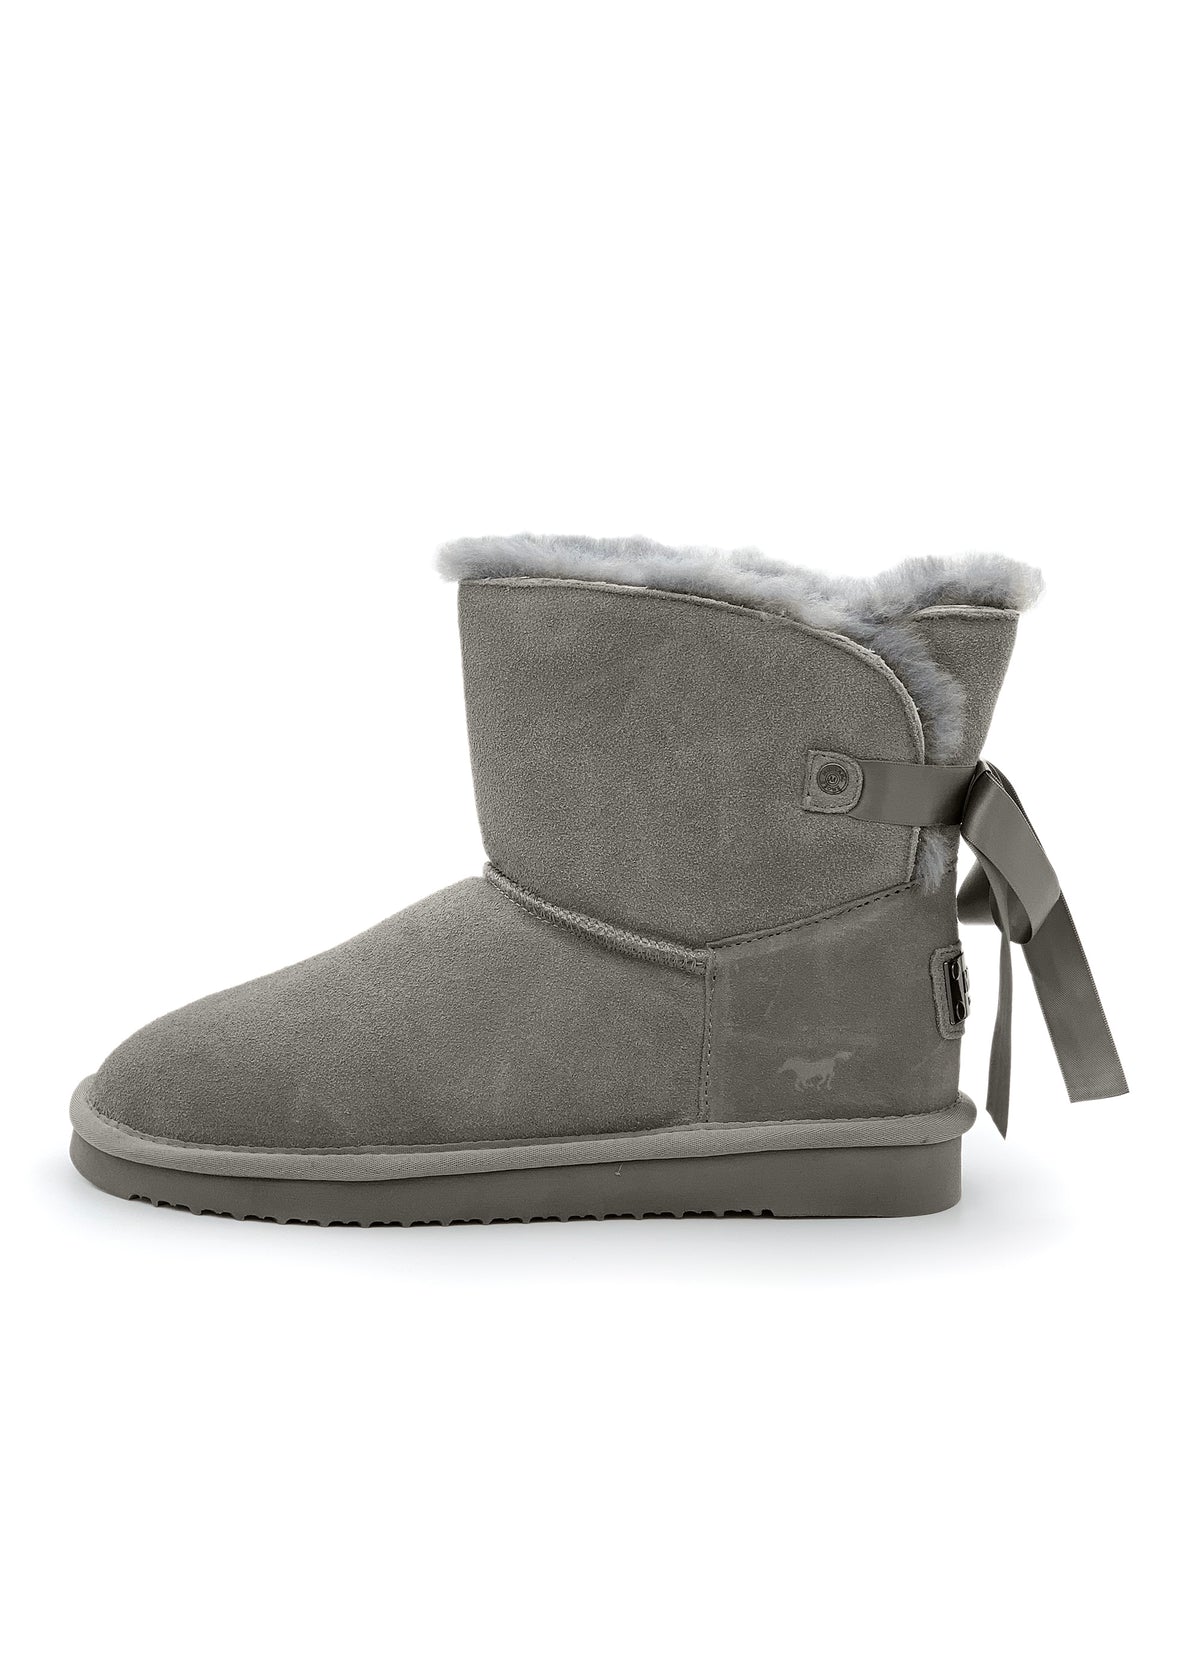 Warm winter boots - gray